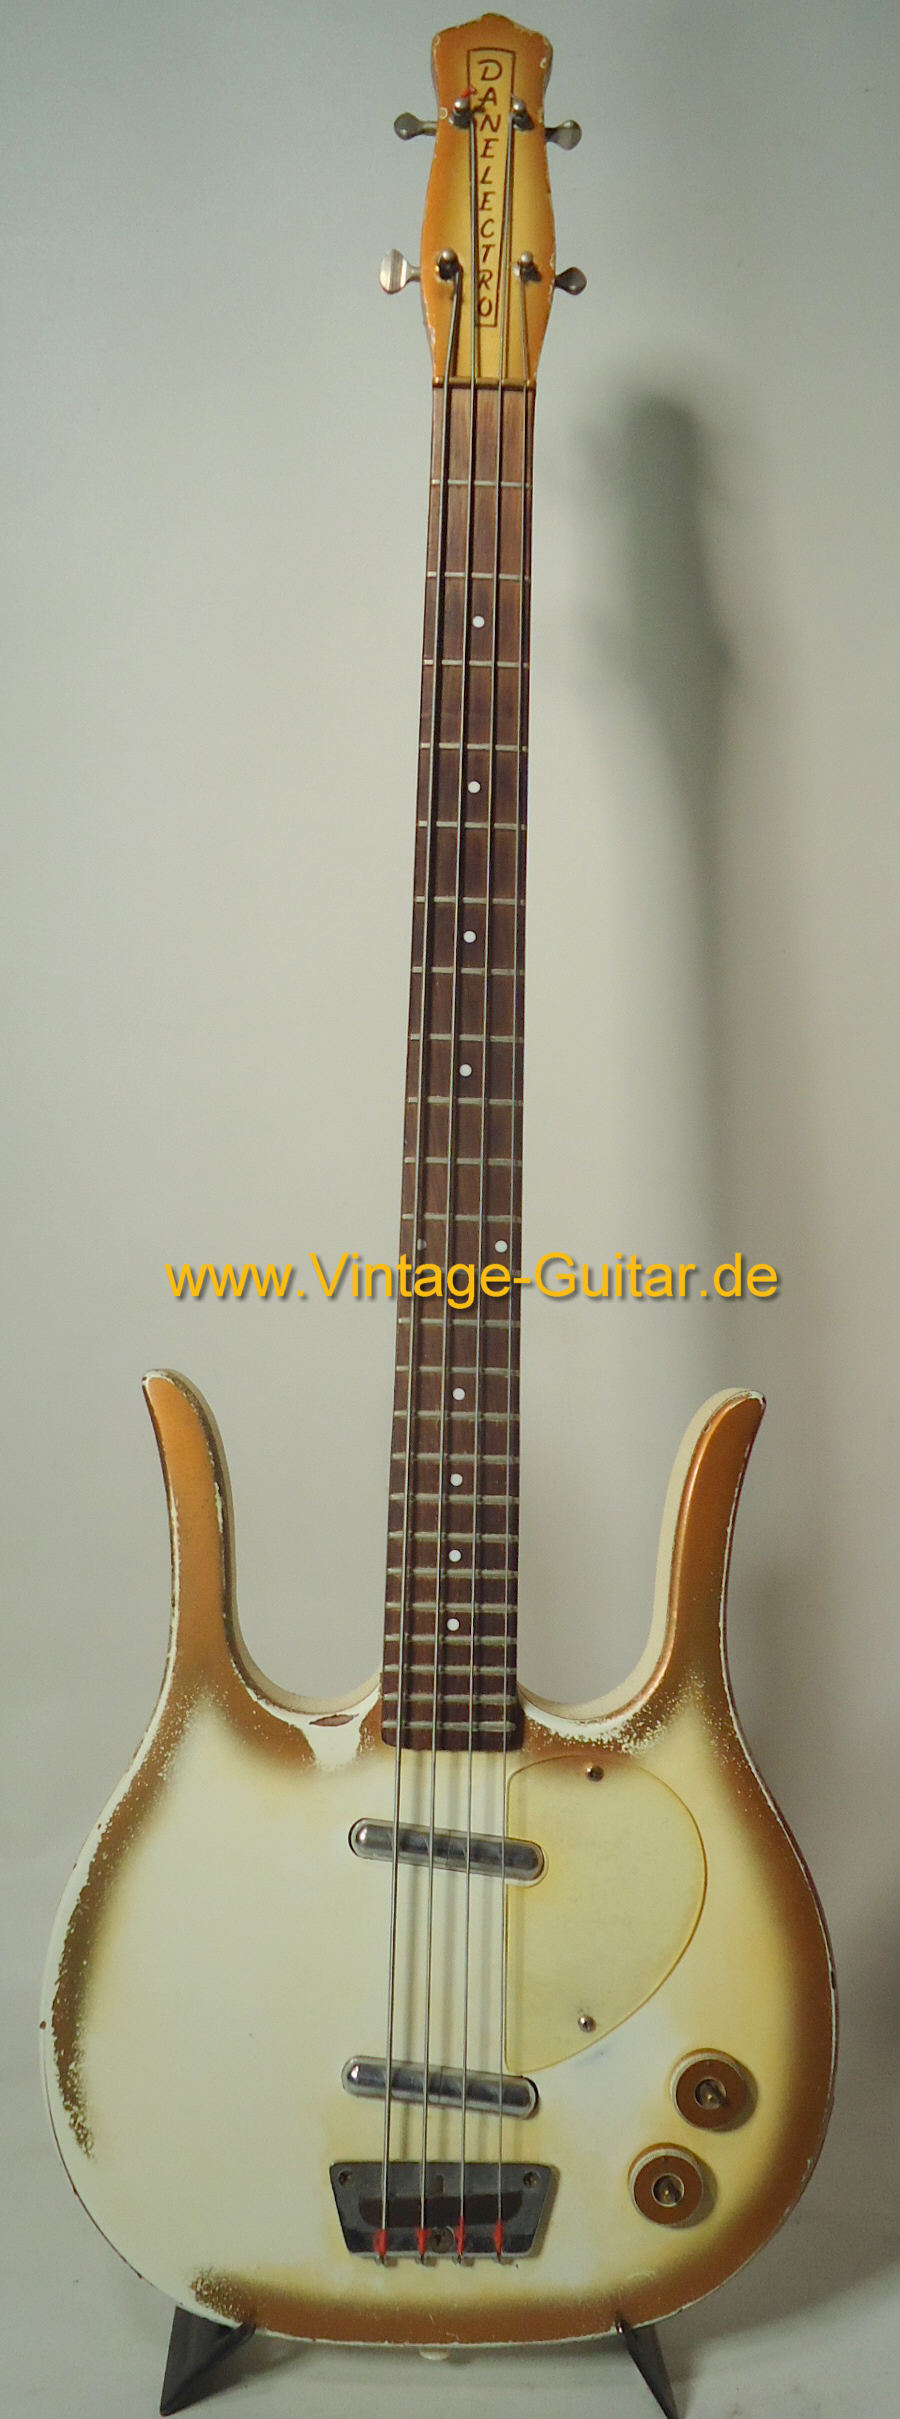 Danelectro Longhorn Bass a.jpg